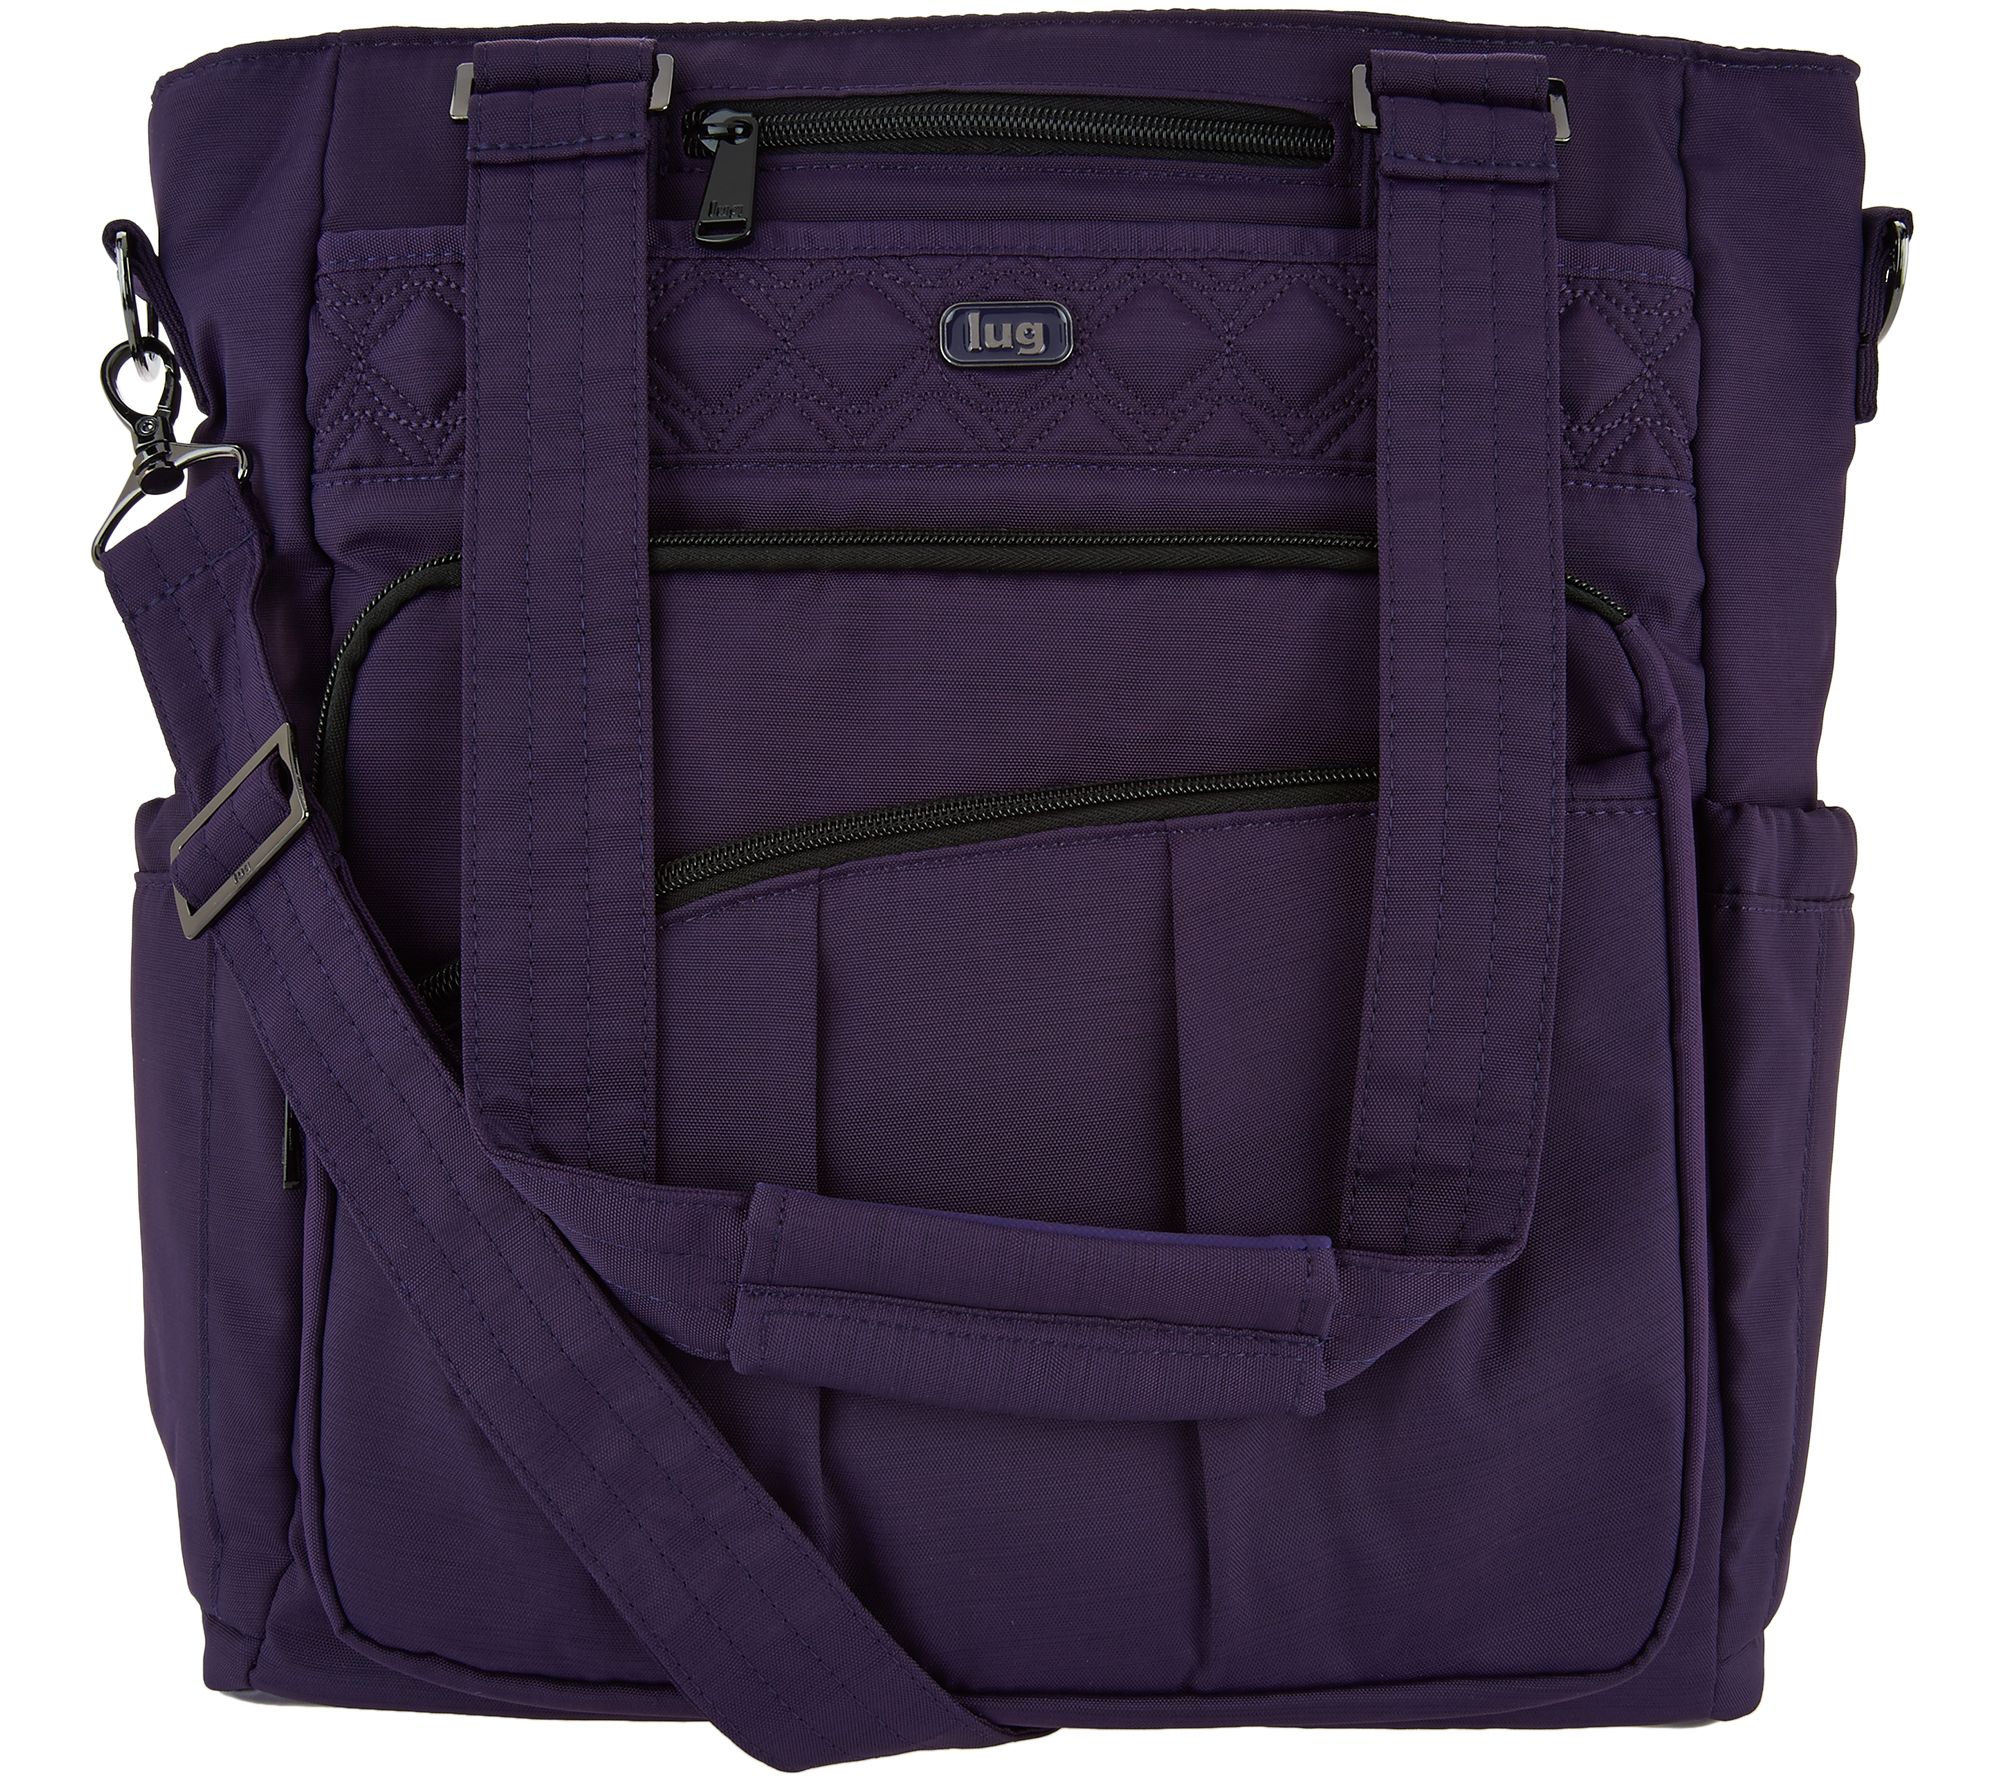 Lug Travel Bags for Women — Handbags & Luggage — www.bagsaleusa.com